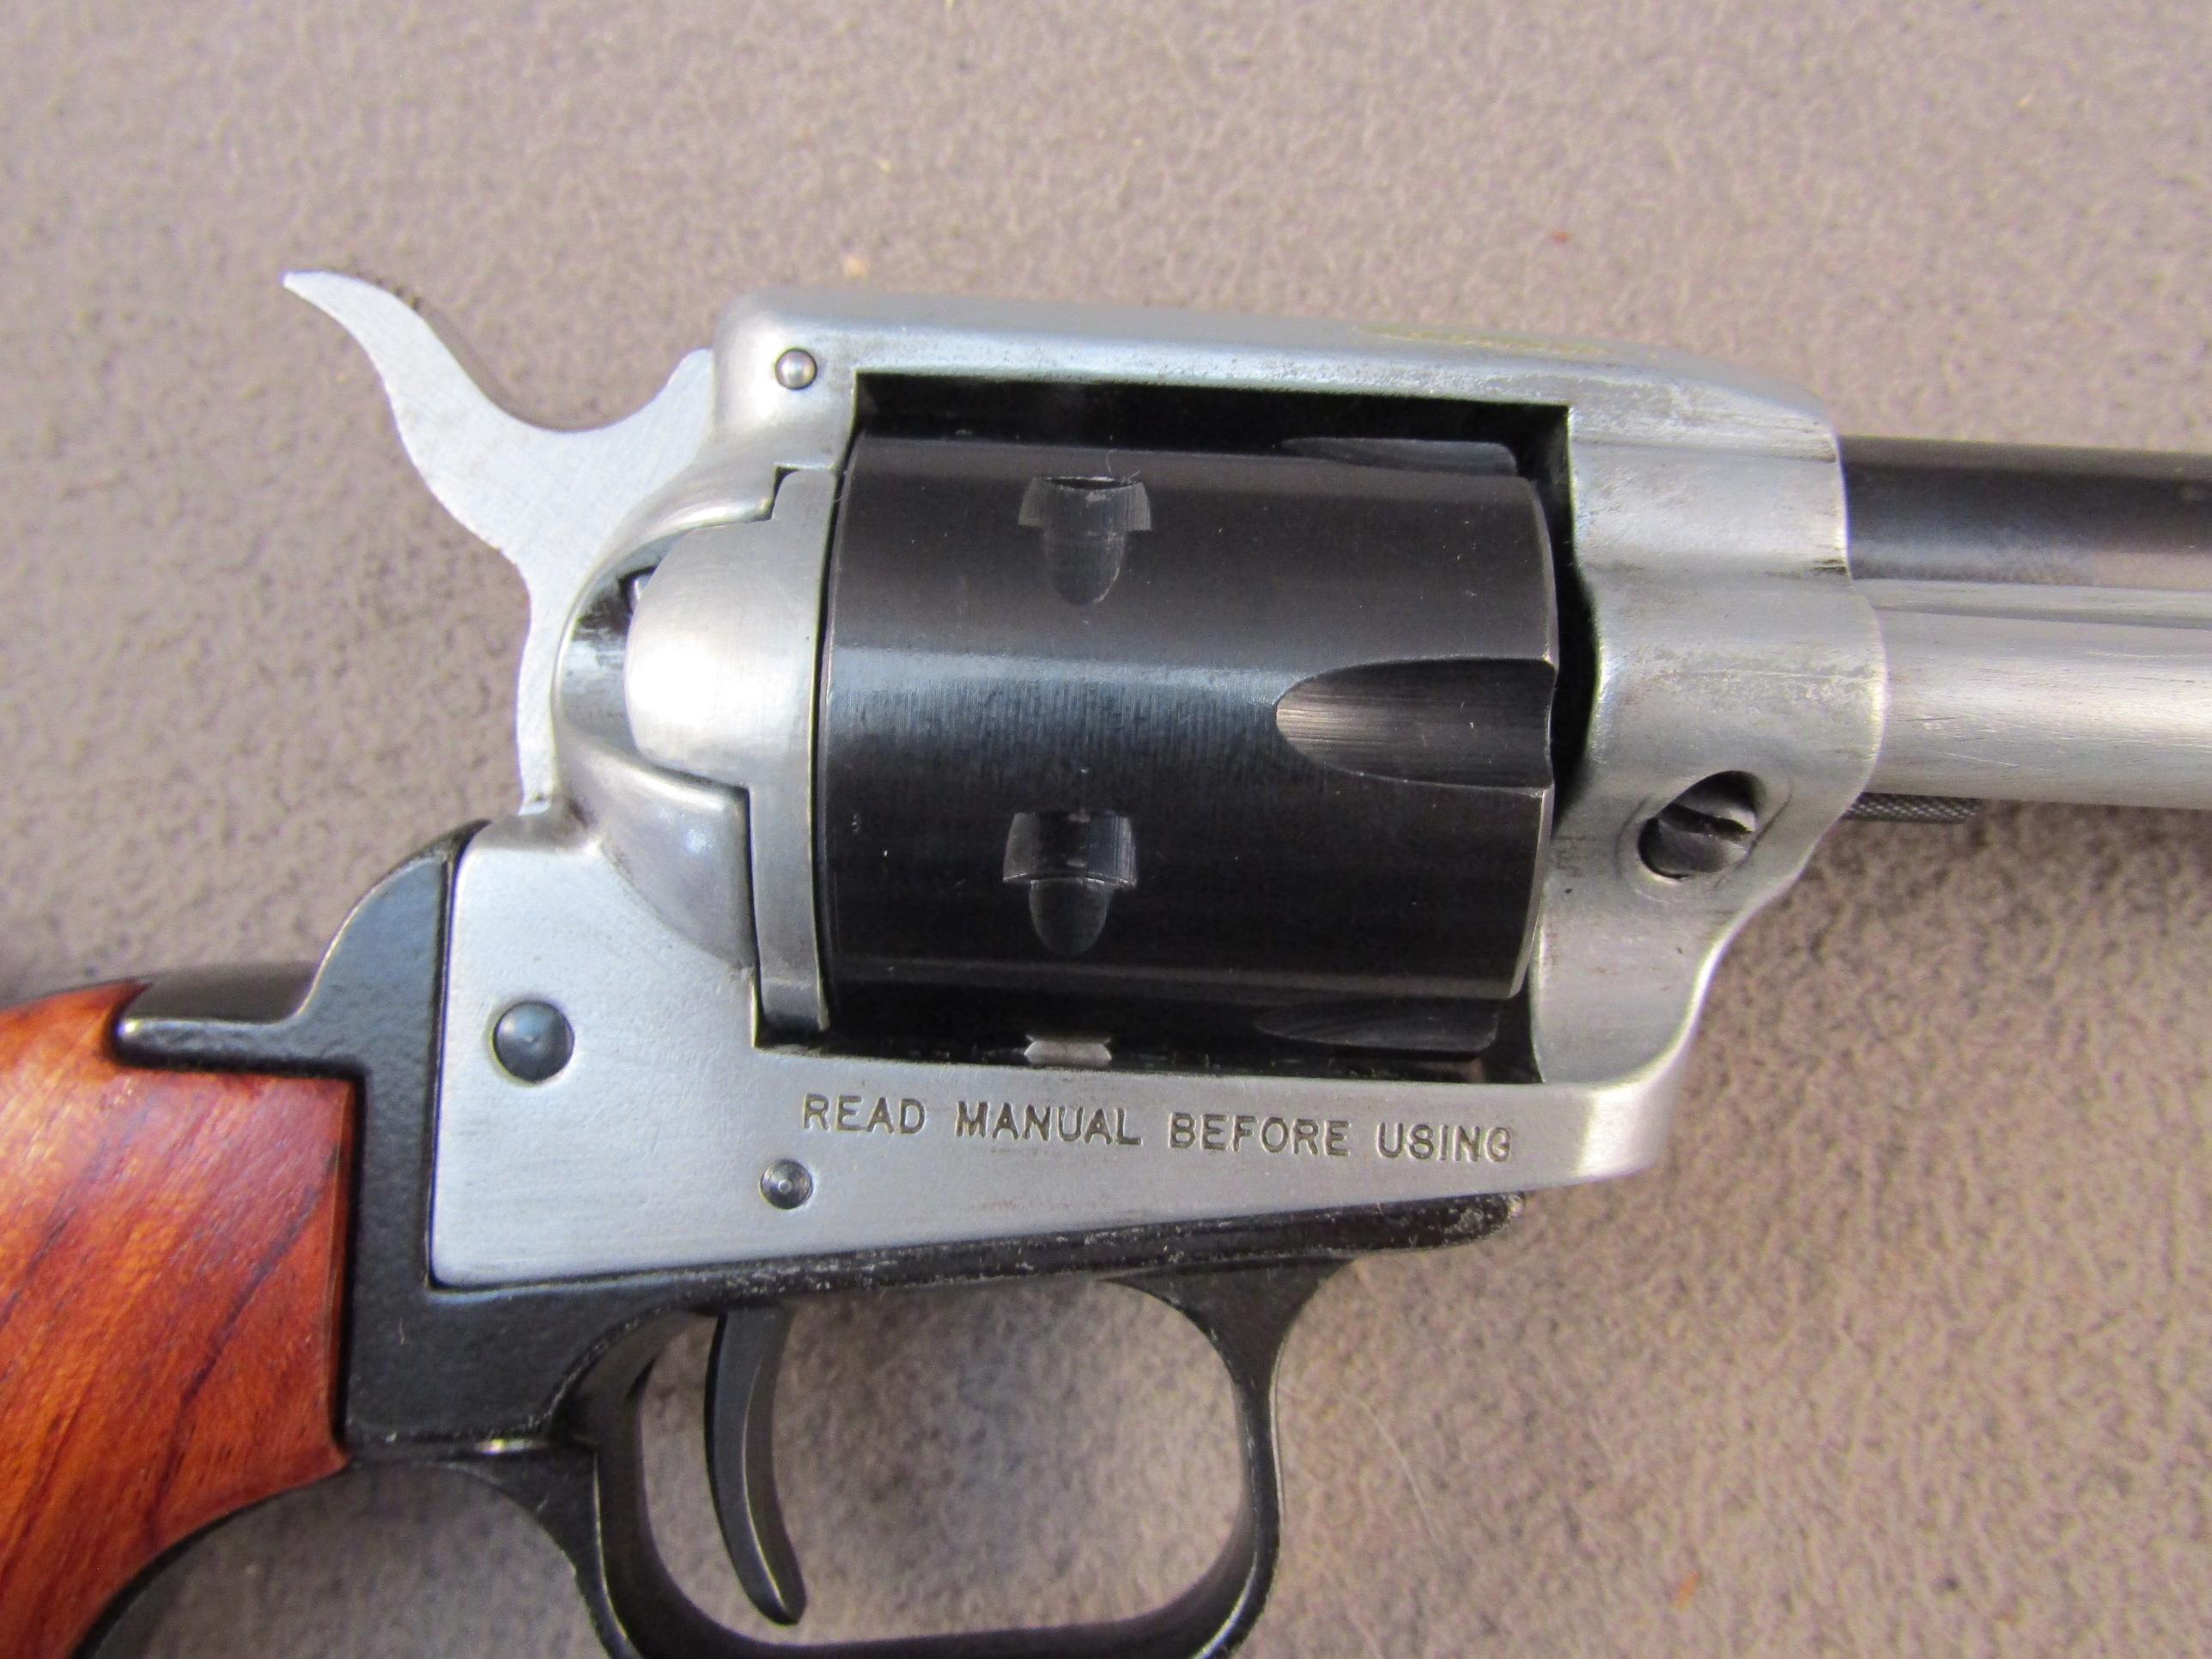 handgun: HERITAGE Model Rough Rider, Revolver, .22, 6 shot, 5.5" barrel, S#G03114